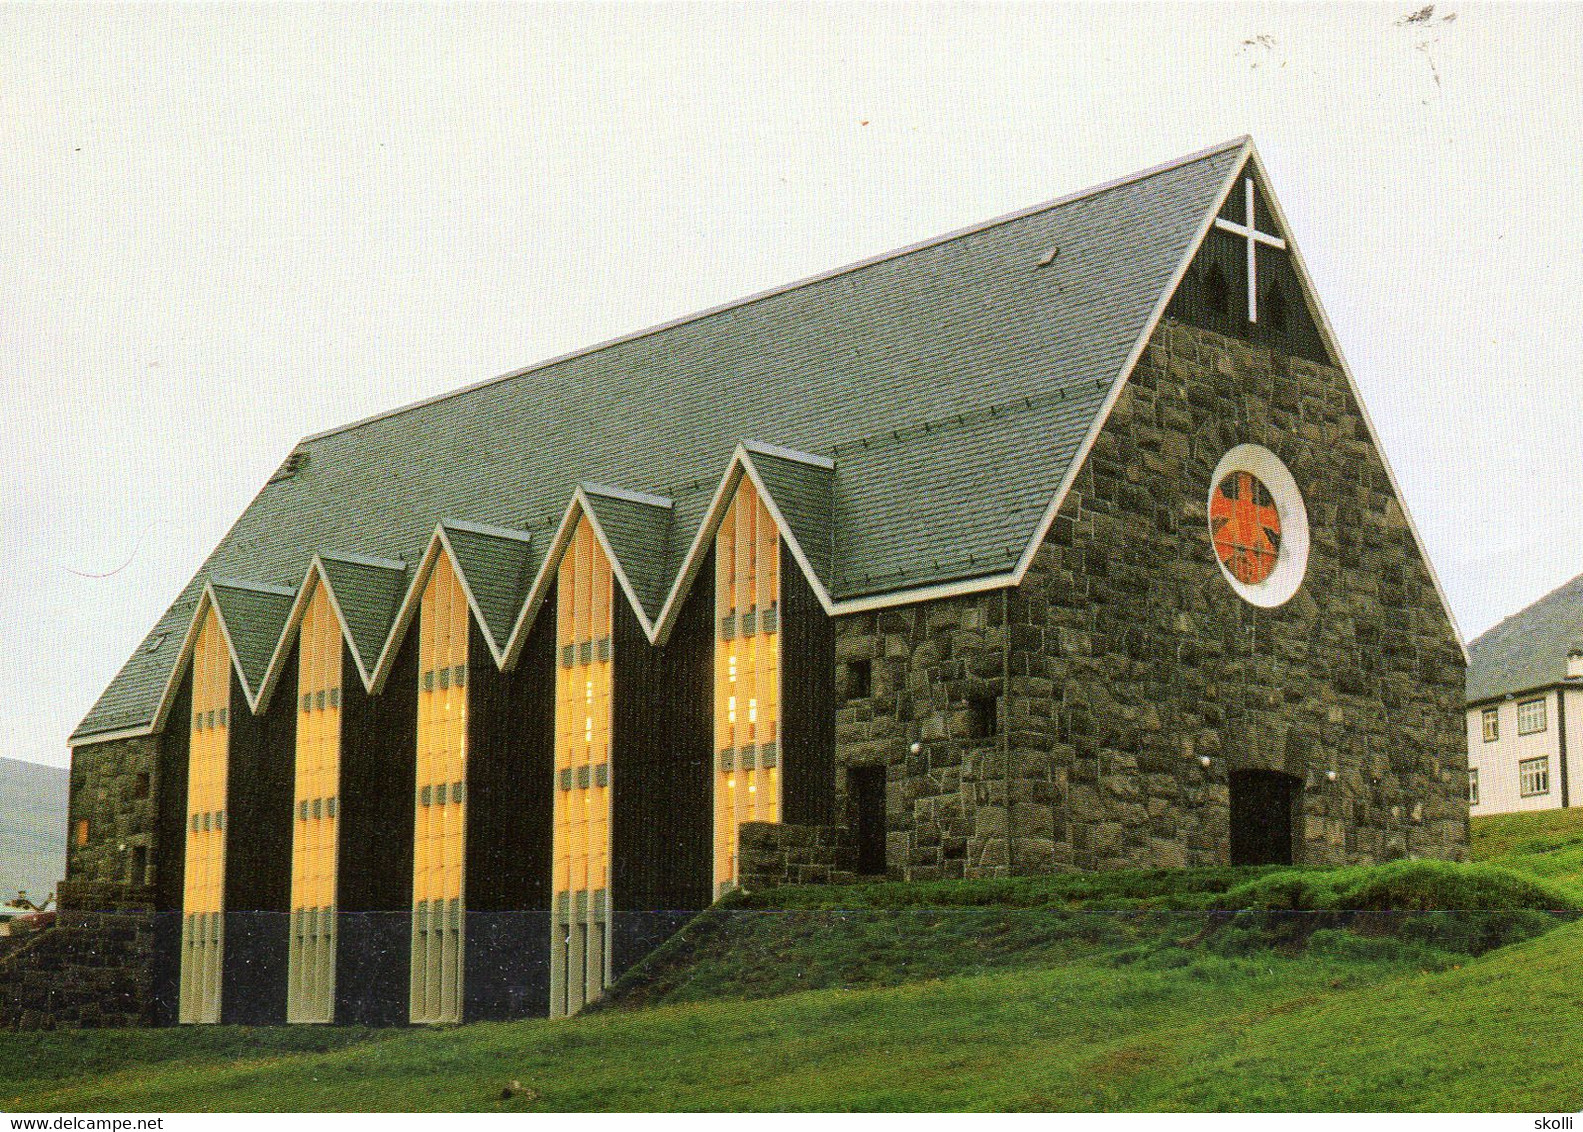 POSTCARD. FAROES. Christianskirkjan, Klakksvik. - Faroe Islands